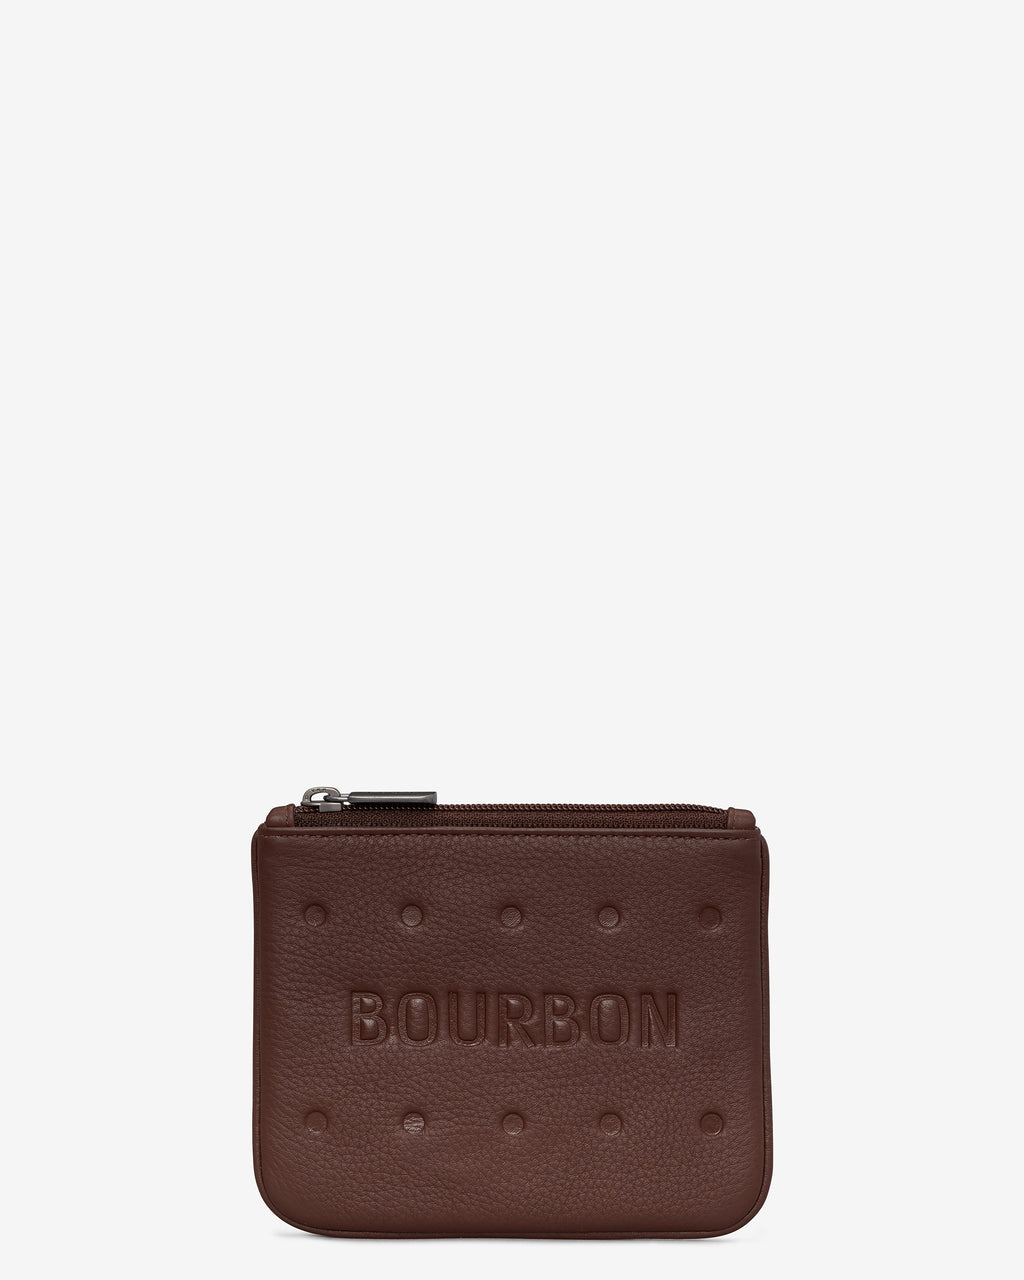 Bourbon Biscuit Leather Zip Top Purse